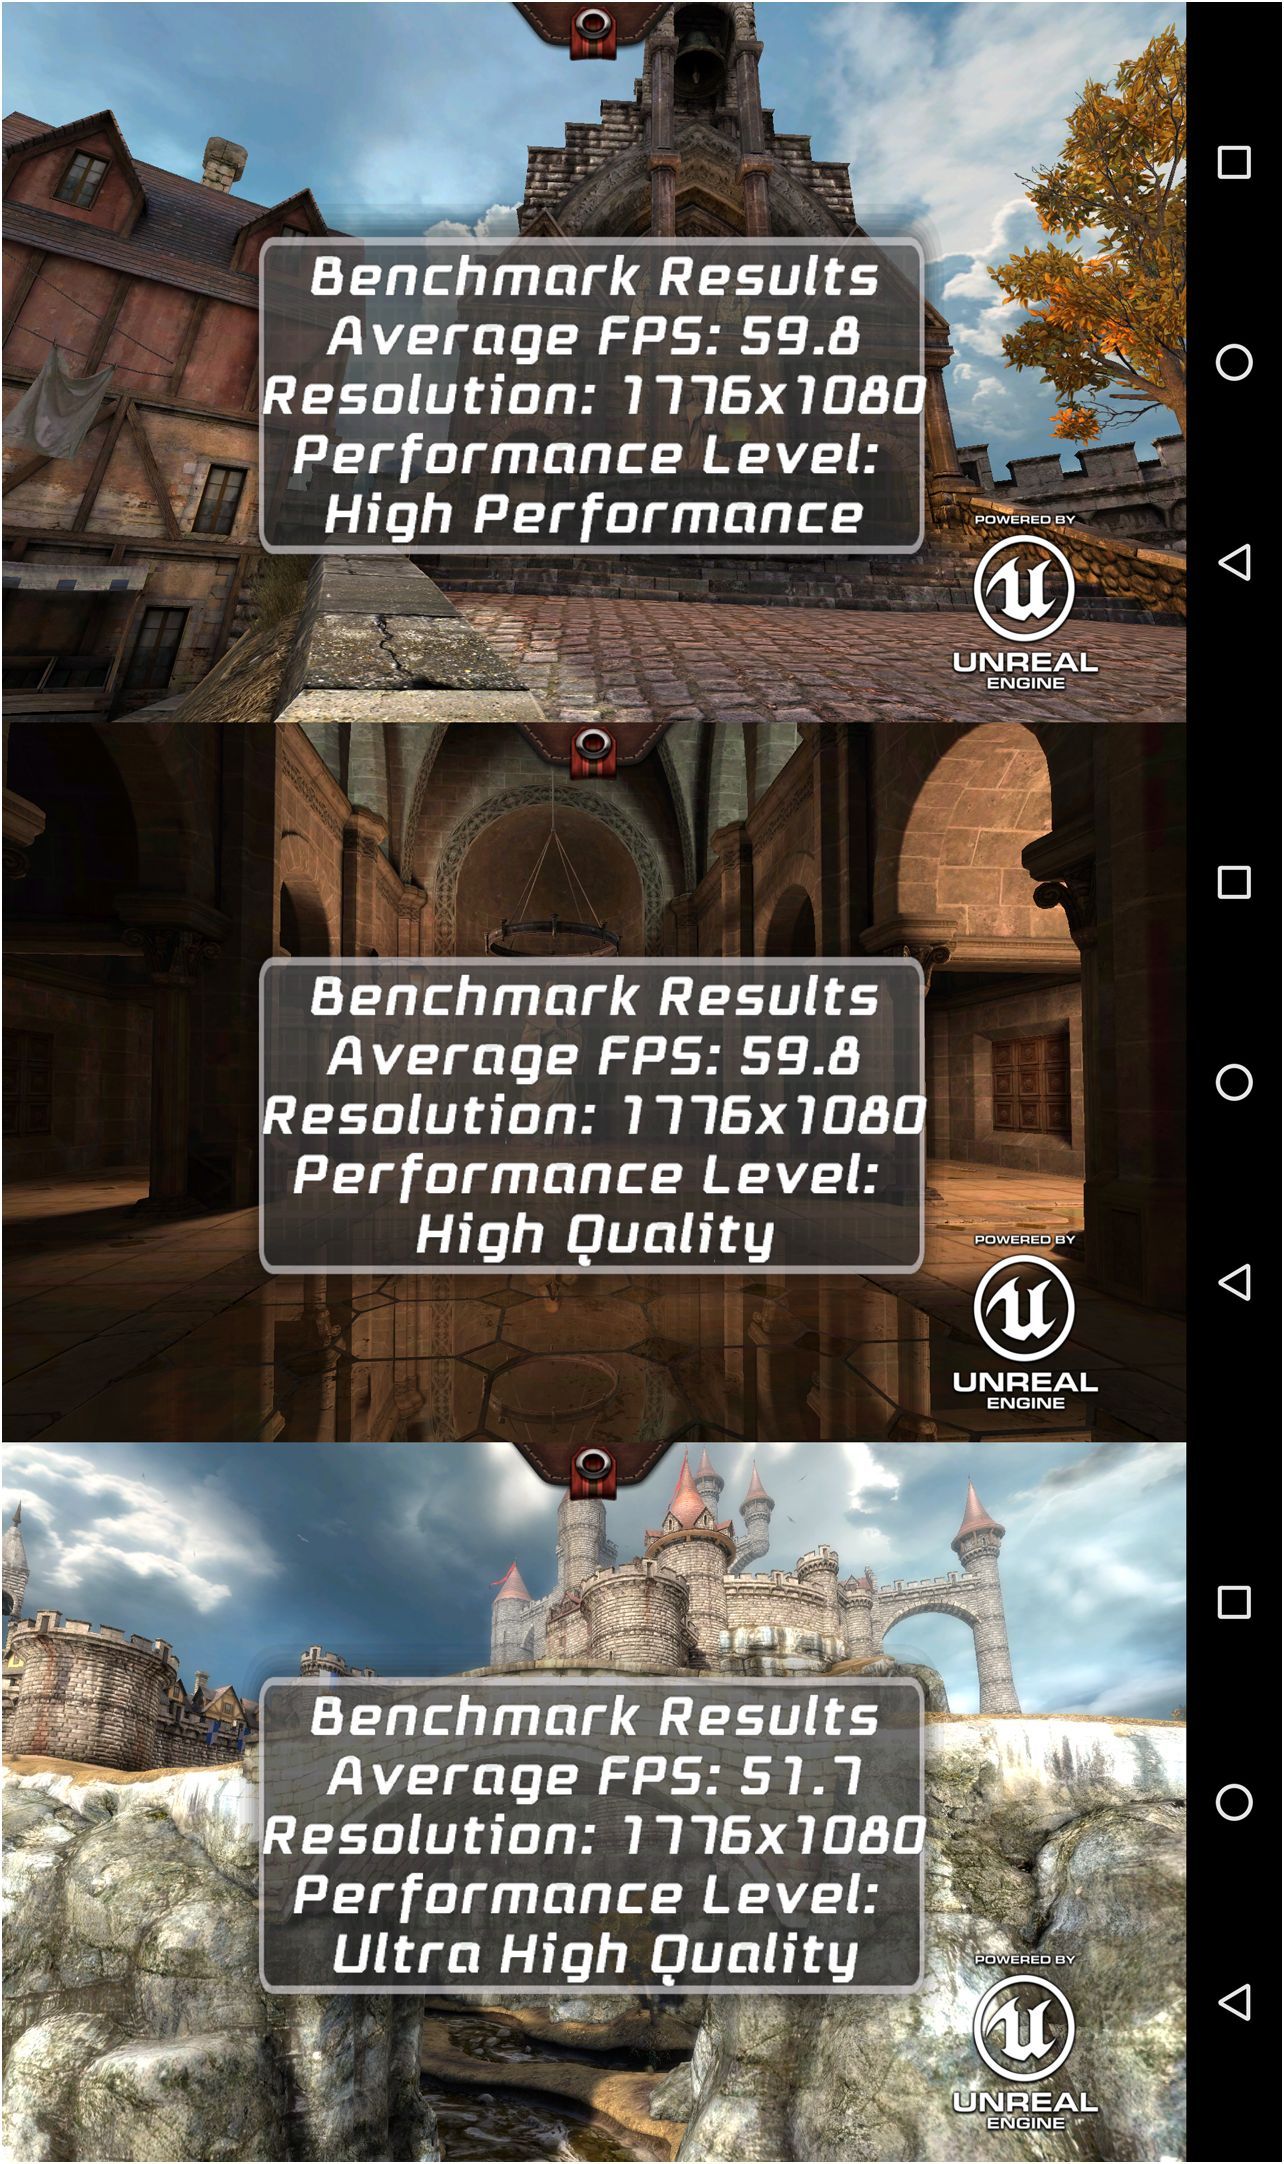 Обзор модульного смартфона Lenovo Moto Z2 Play: средний класс с приставками